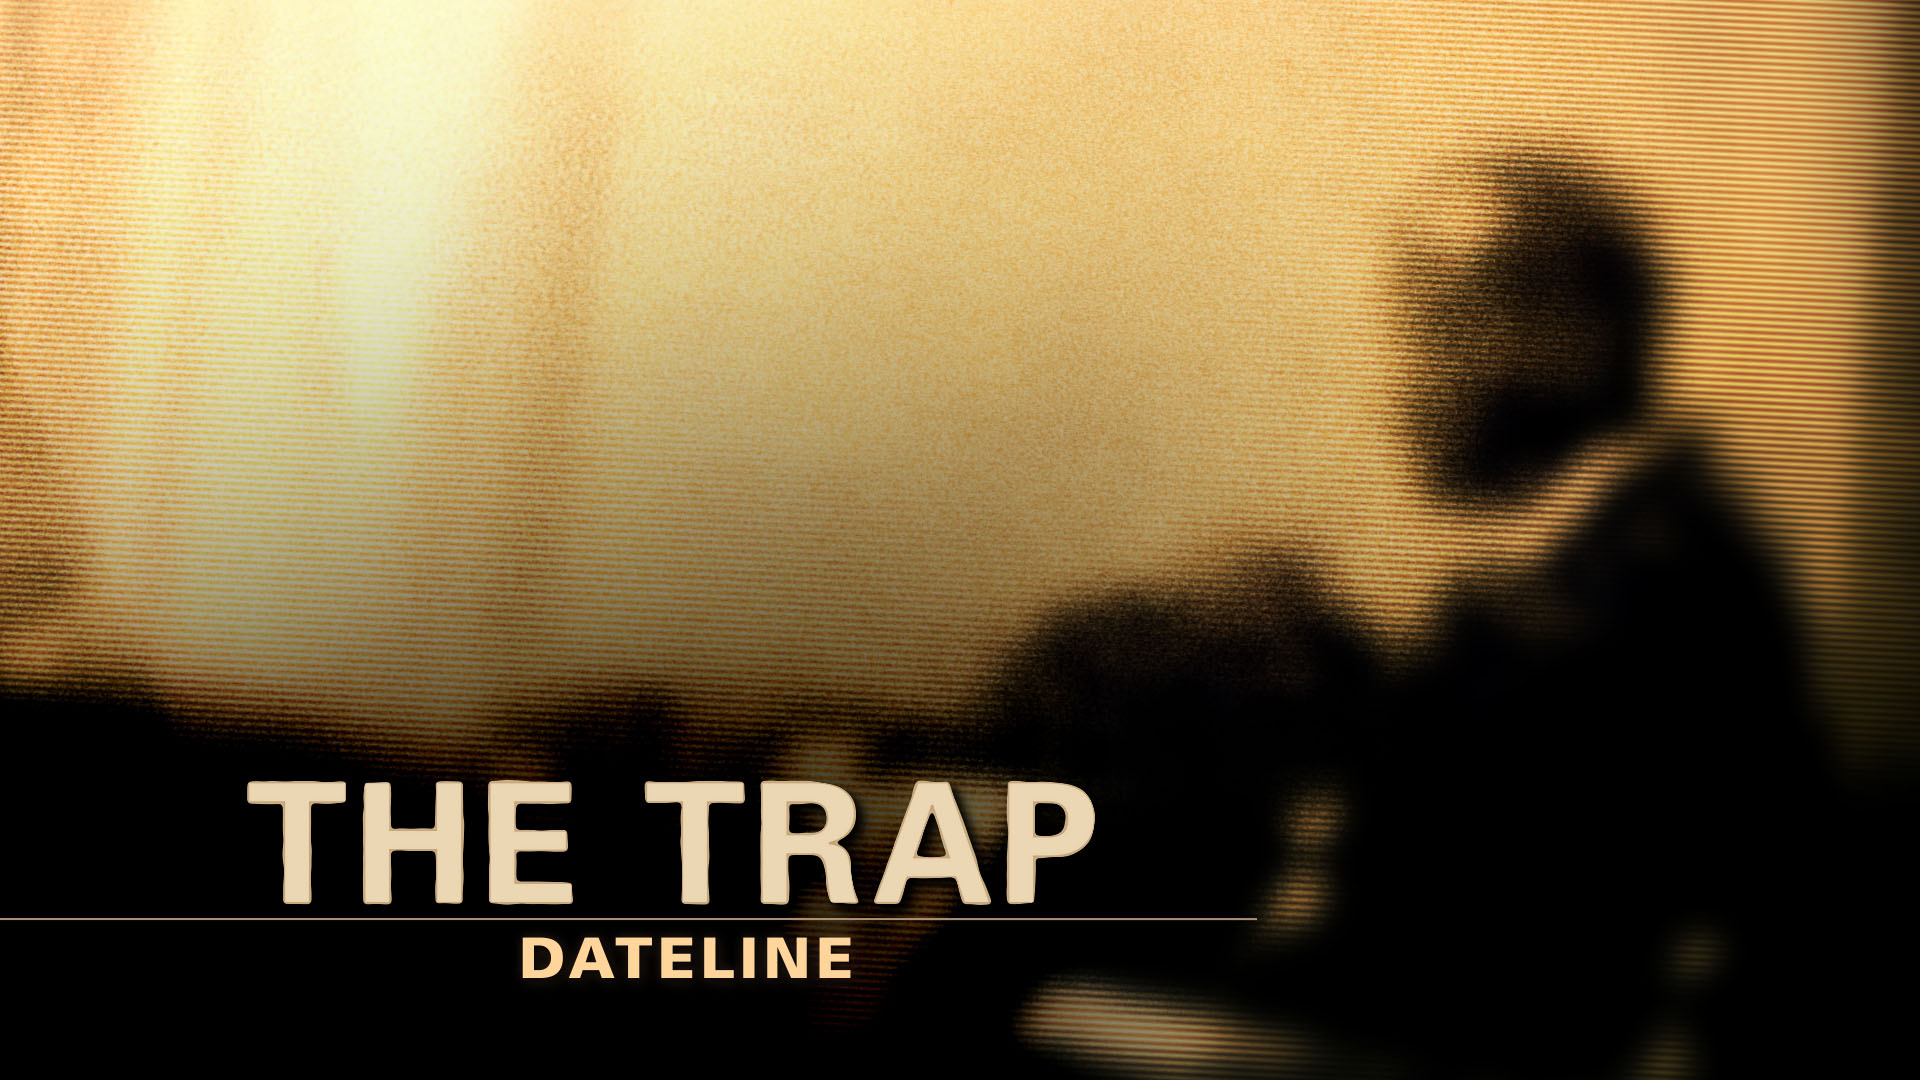 Watch Dateline Episode: The Trap - NBC.com